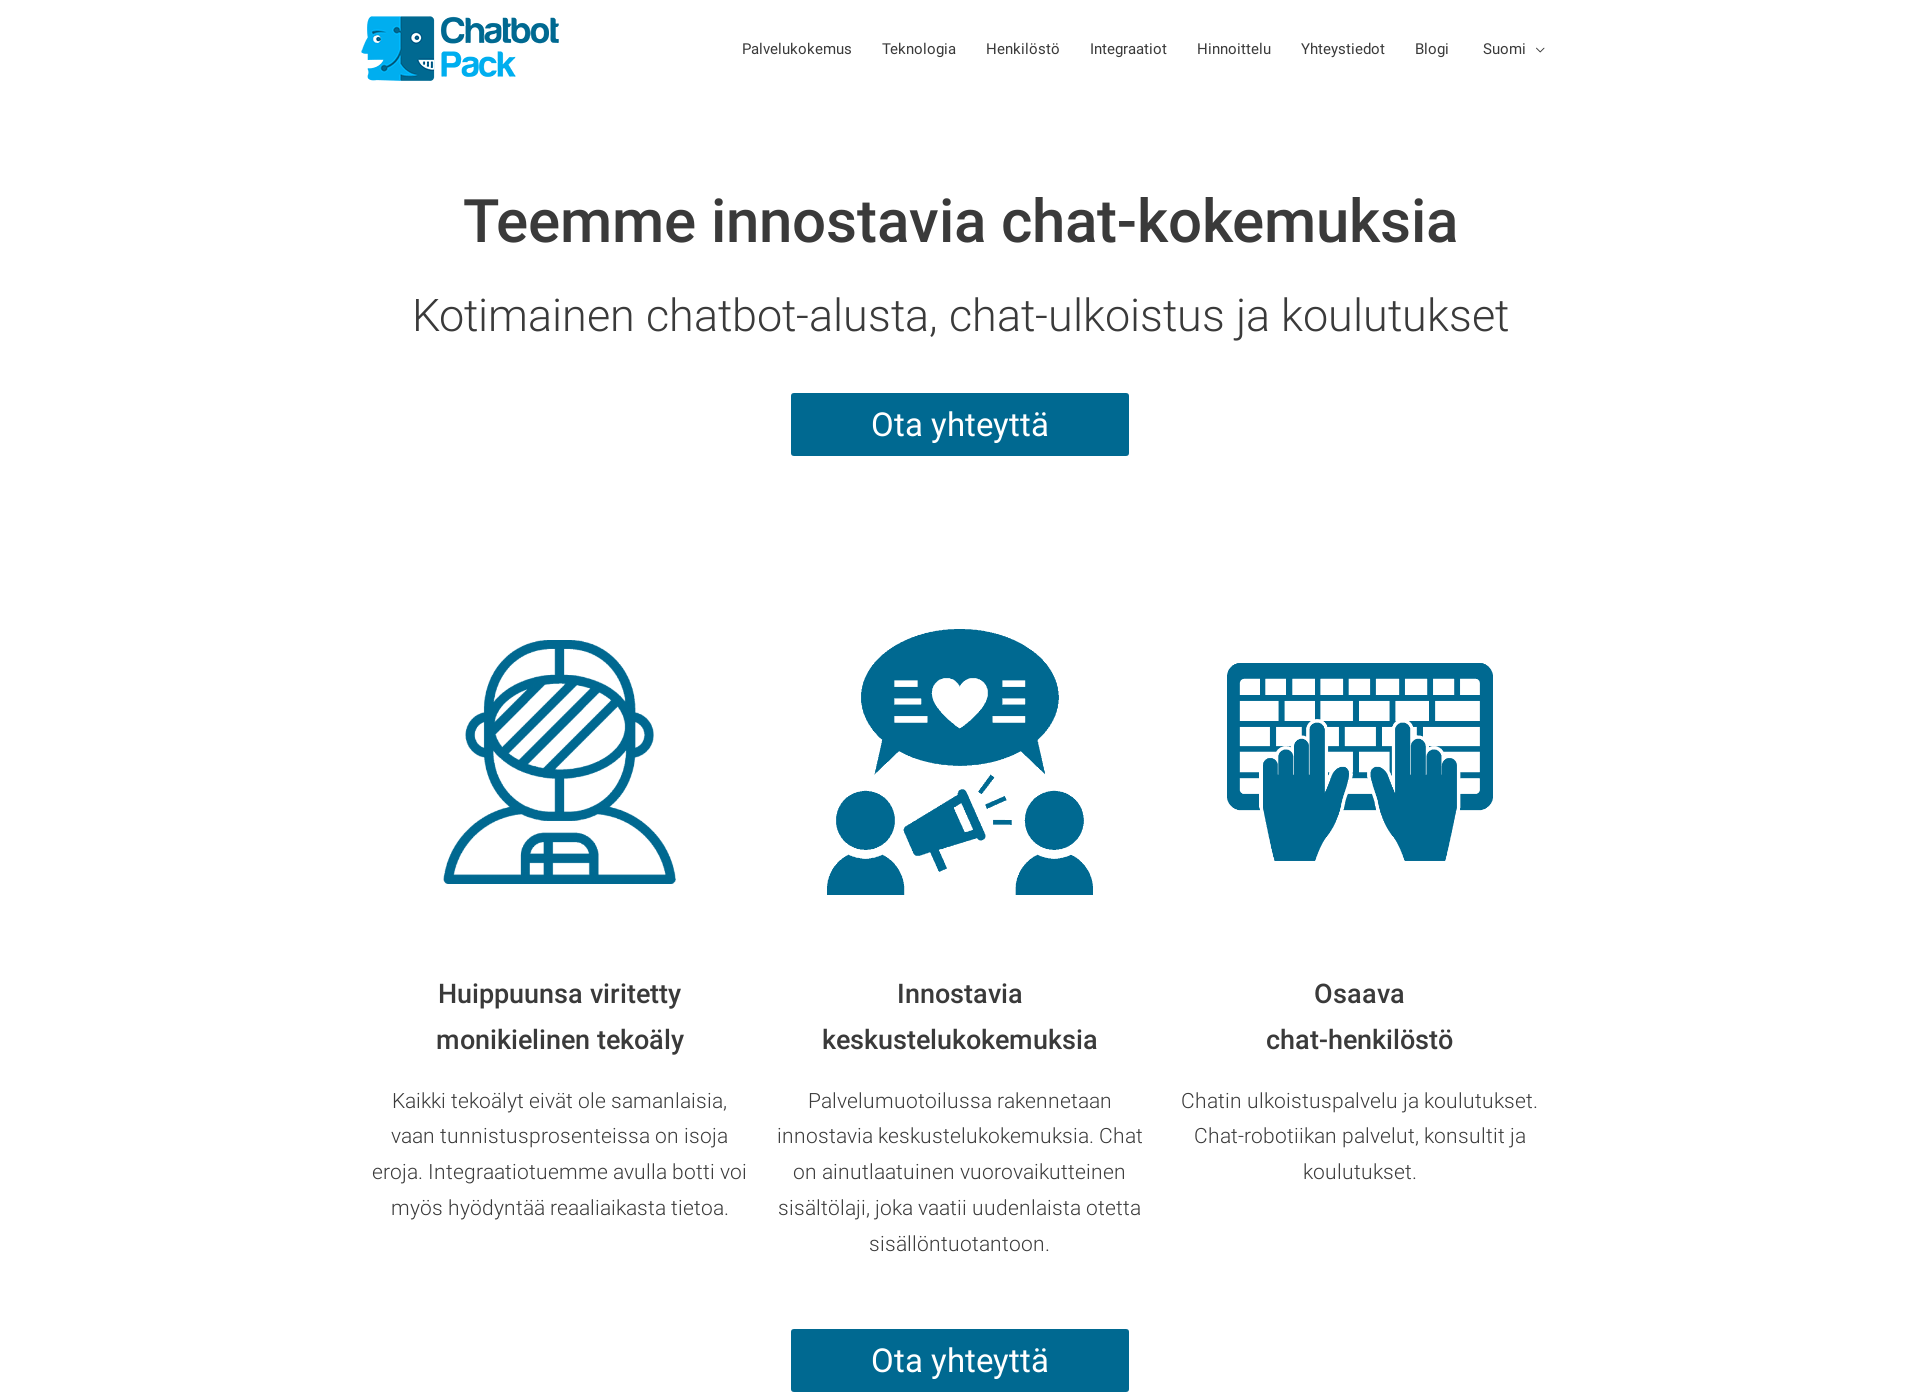 Näyttökuva chatbotpack.fi